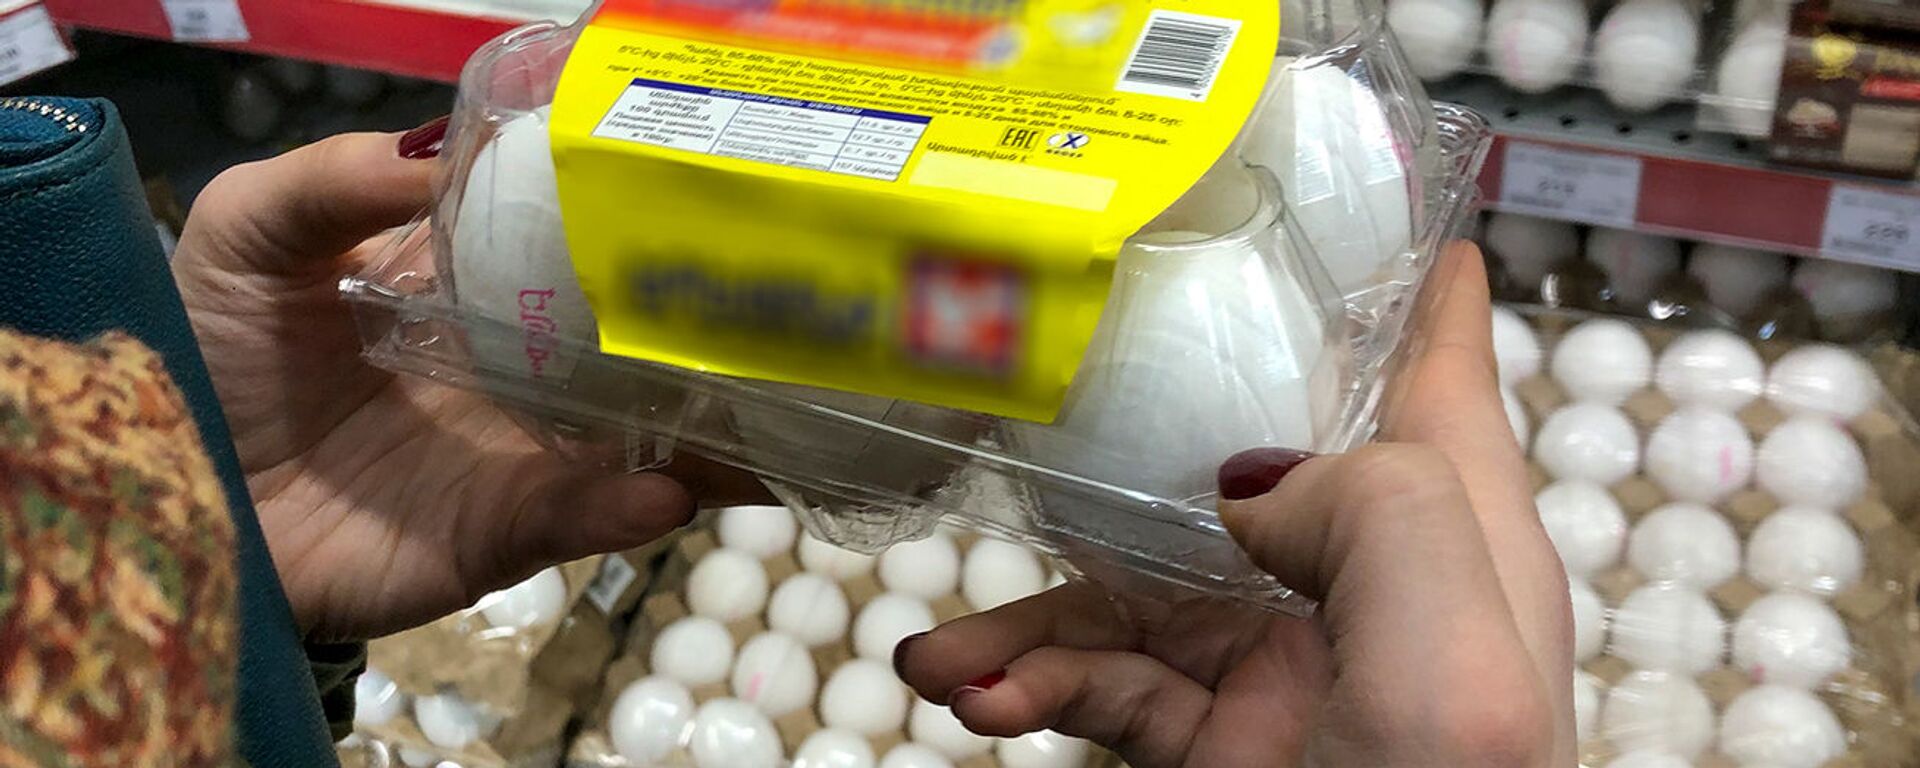 Яйца на прилавках супермаркета - Sputnik Армения, 1920, 13.03.2021